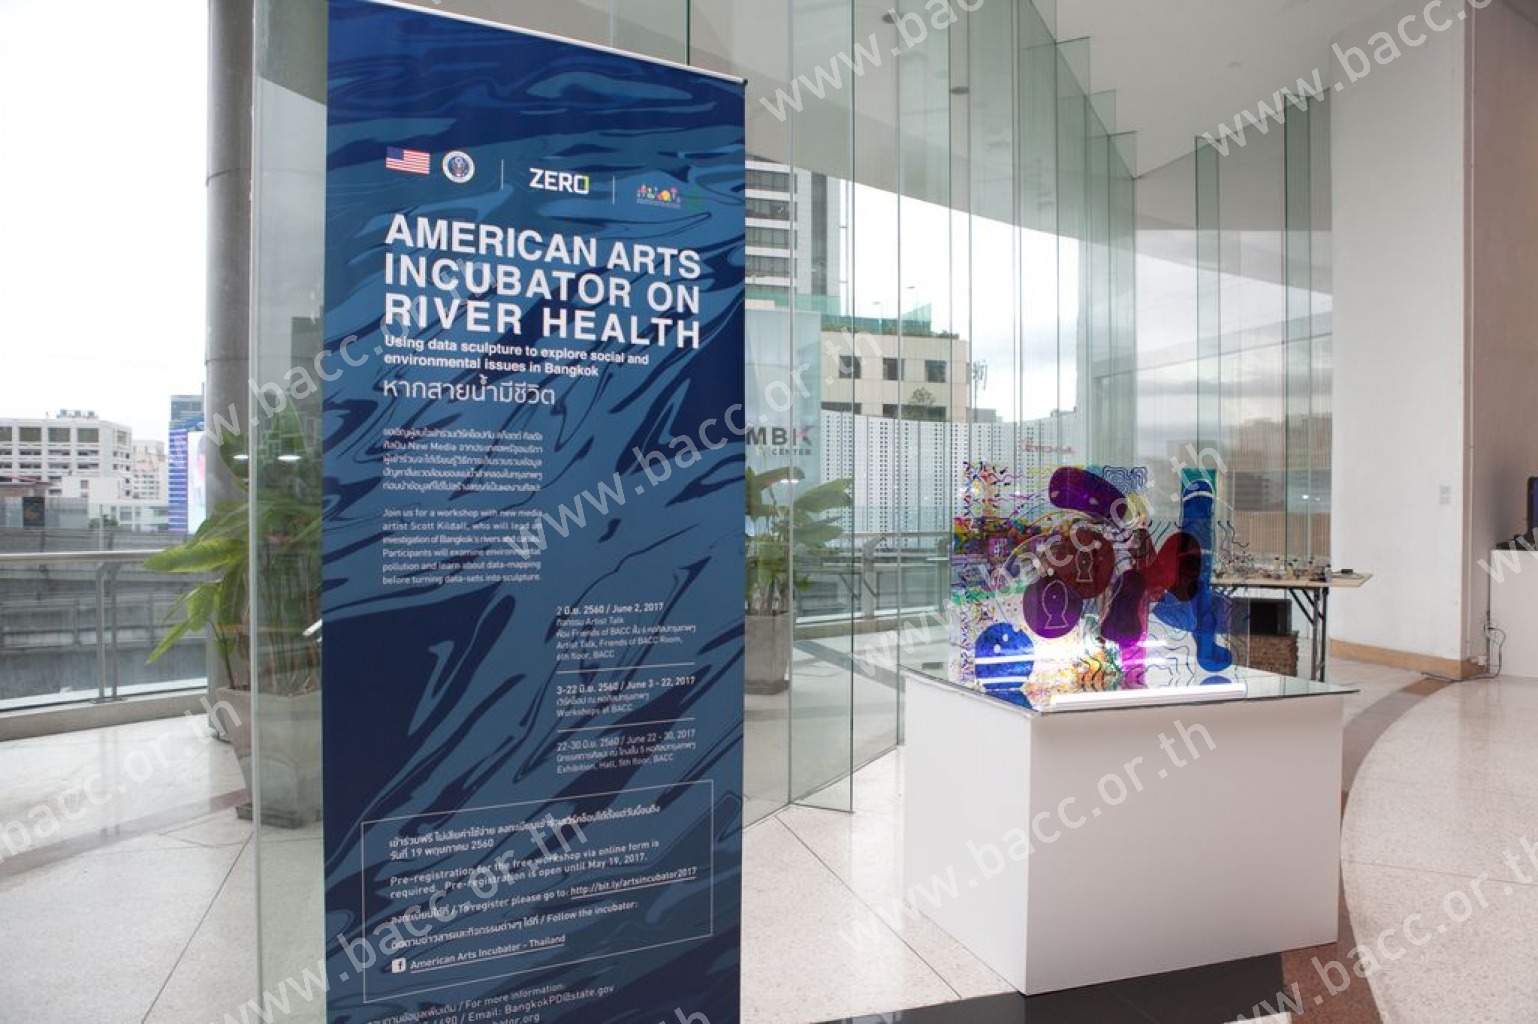 American Arts Incubator on River Health